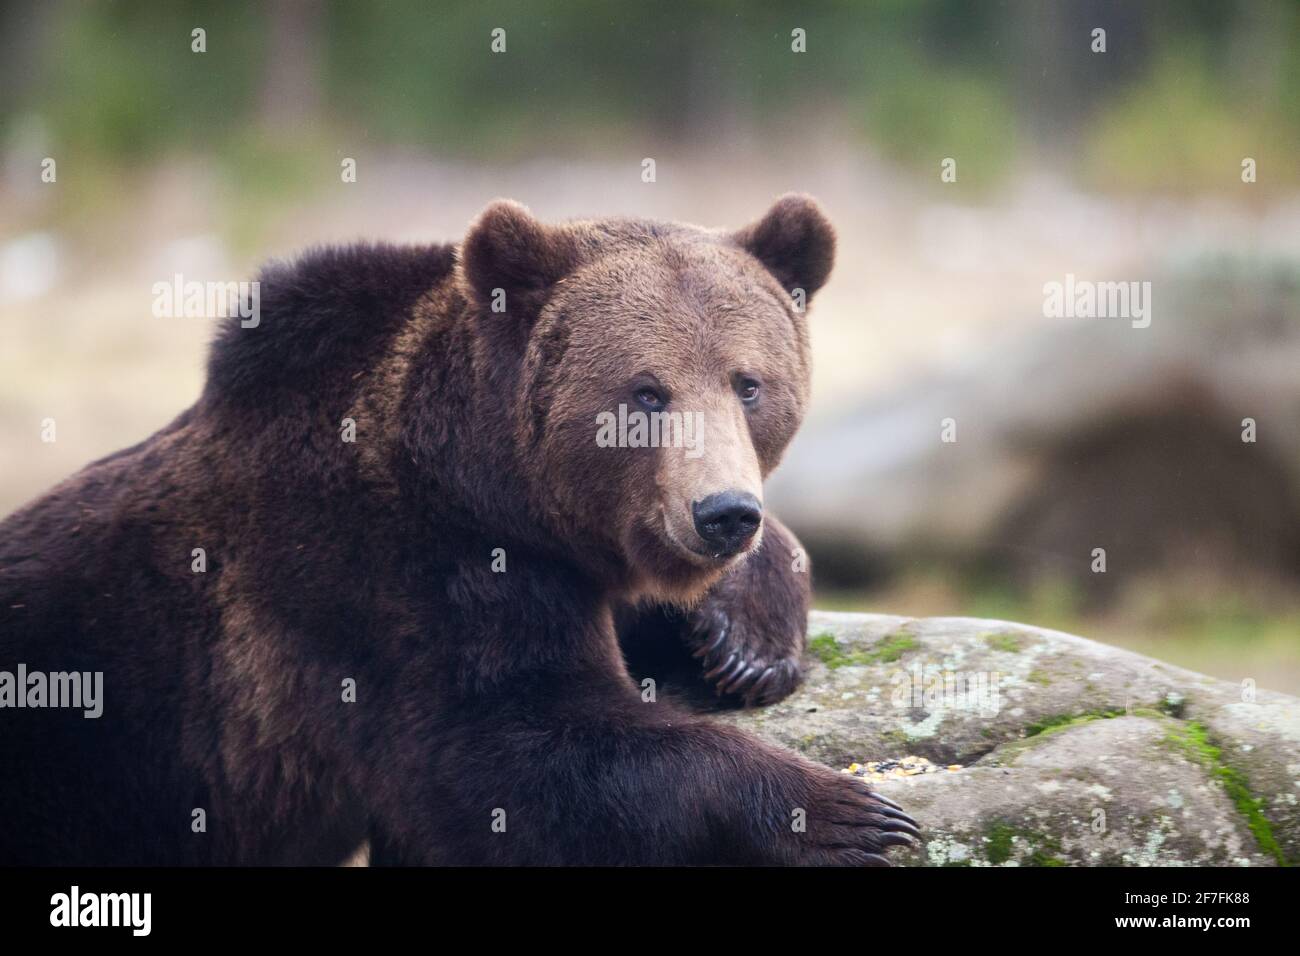 Brown bear portrait in the wilderness, Carpathian mountains, Romania, Europe Stock Photo